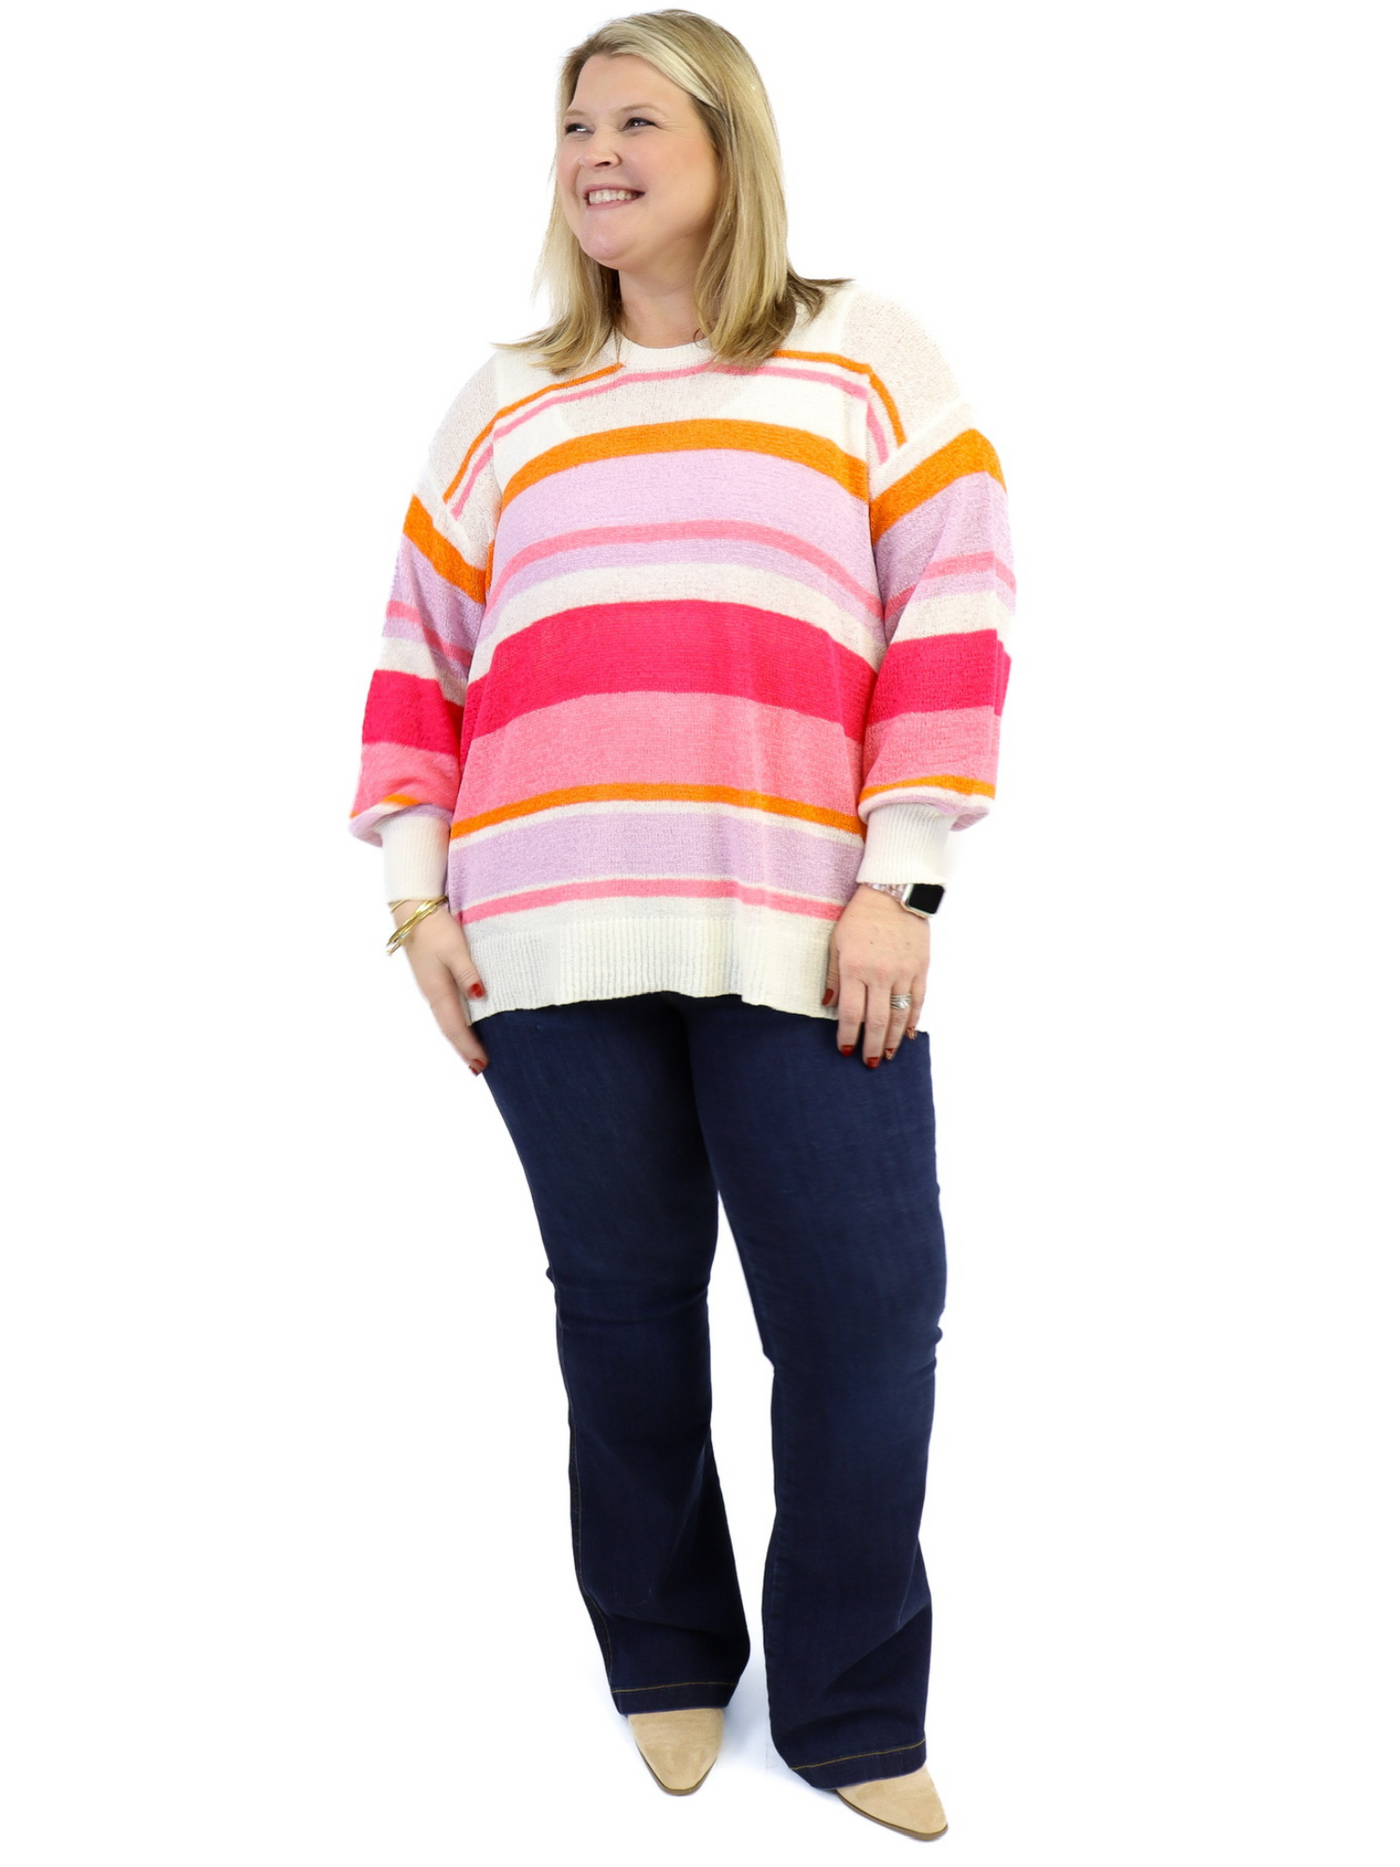 Mud Pie Montana Sweater - Ivory/Pink/Orange with Spanx Jeans size 16